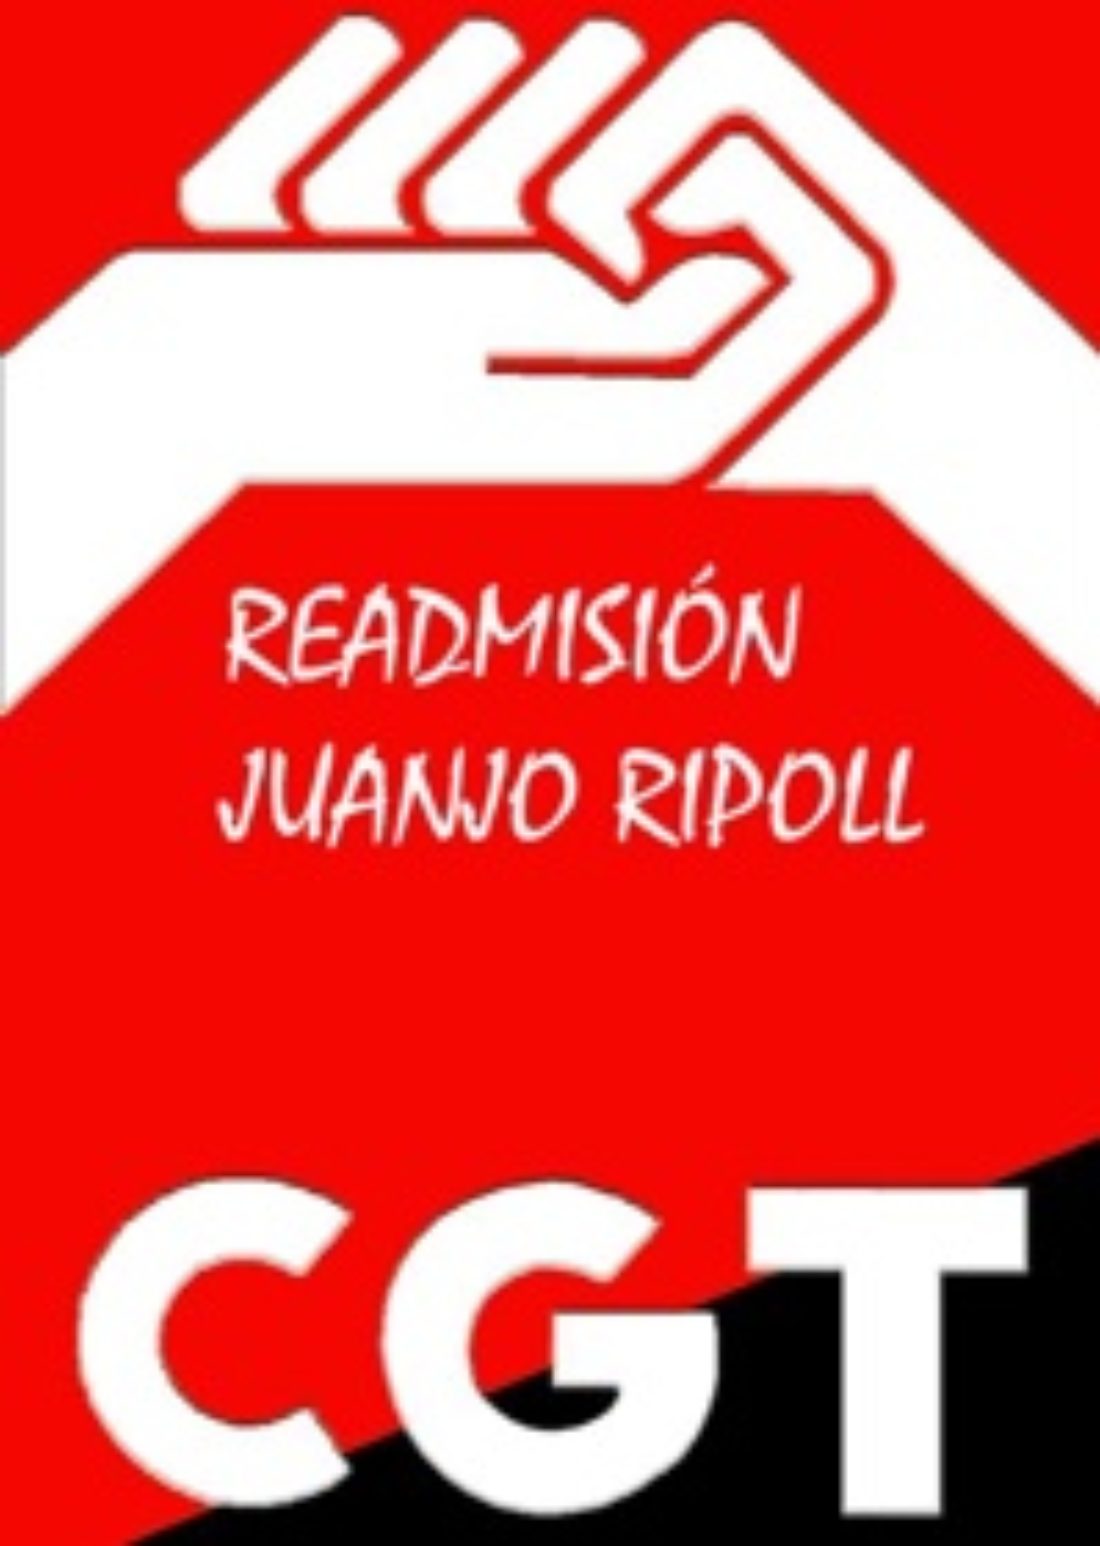 28 oct, Segorbe (Castelló) : Marcha por la readmisión de Juanjo Ripoll